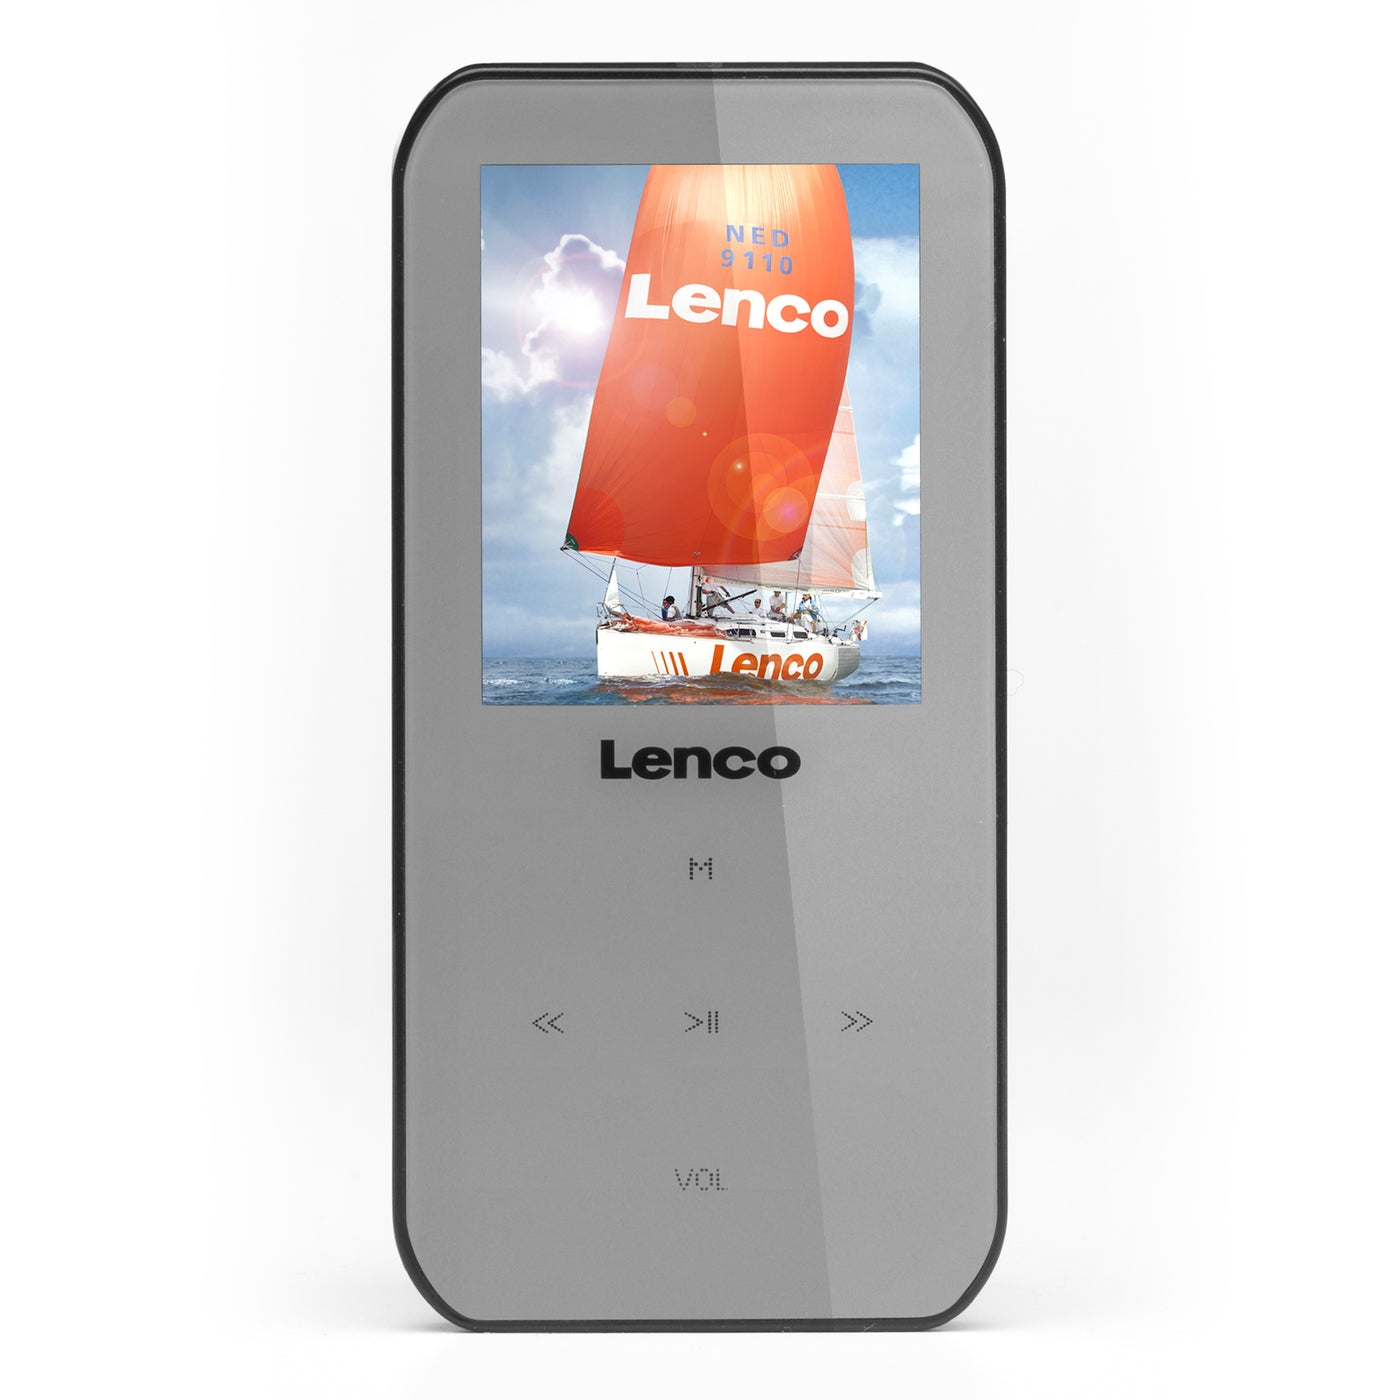 Lenco Xemio-655 Grey - MP3/MP4 Player with 4GB memory - Grey